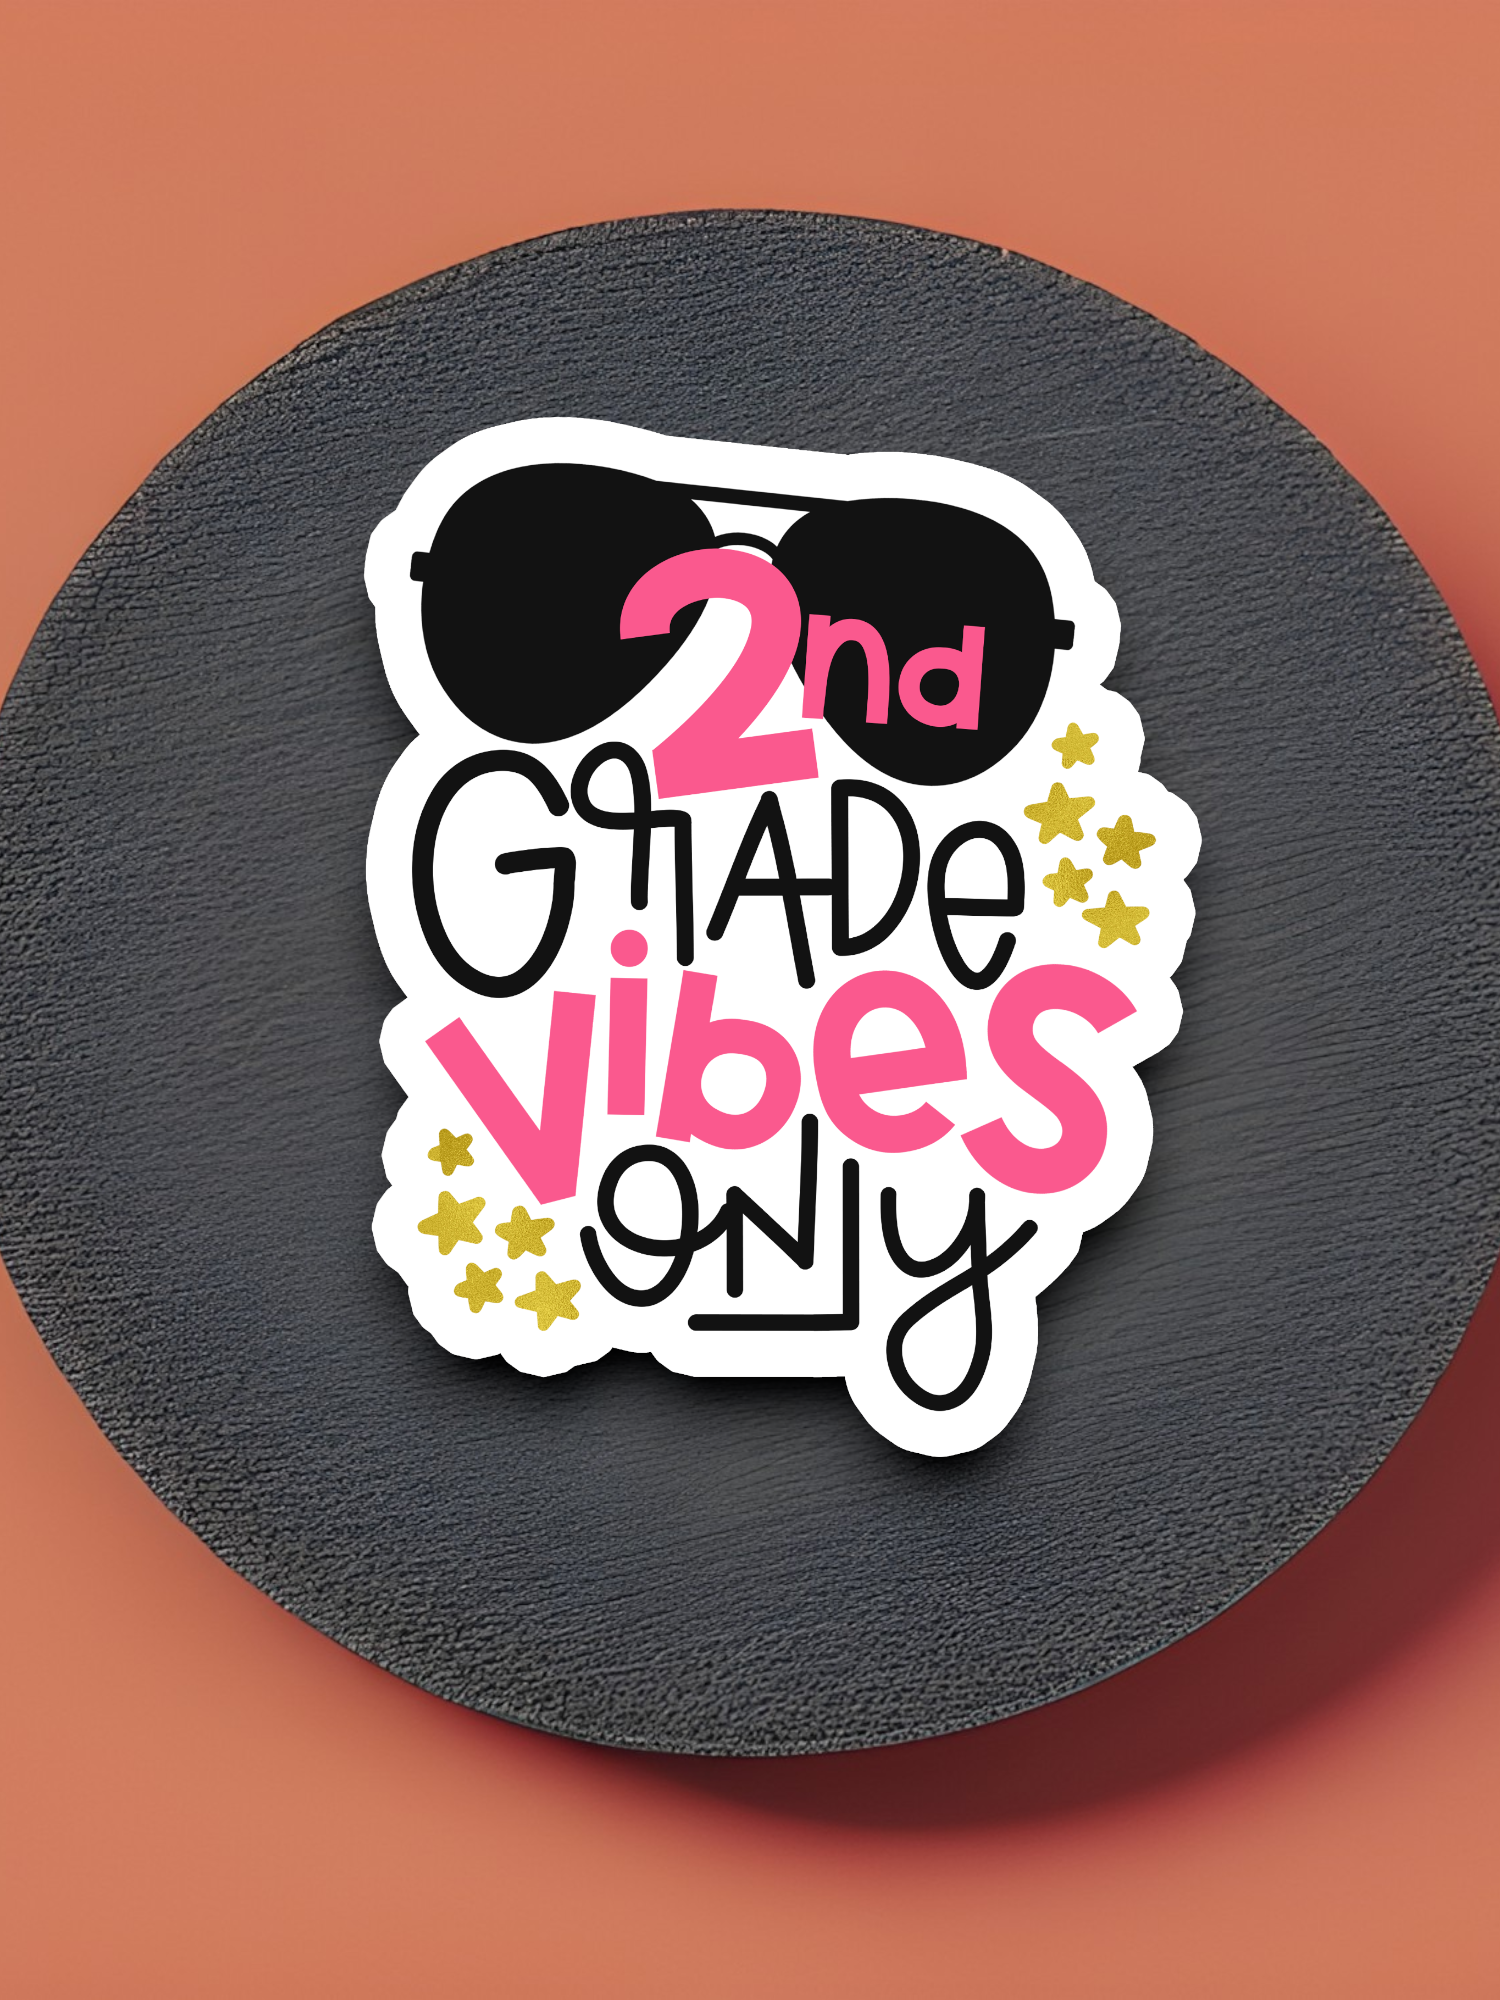 2nd Grade Vibes Only - School Sticker